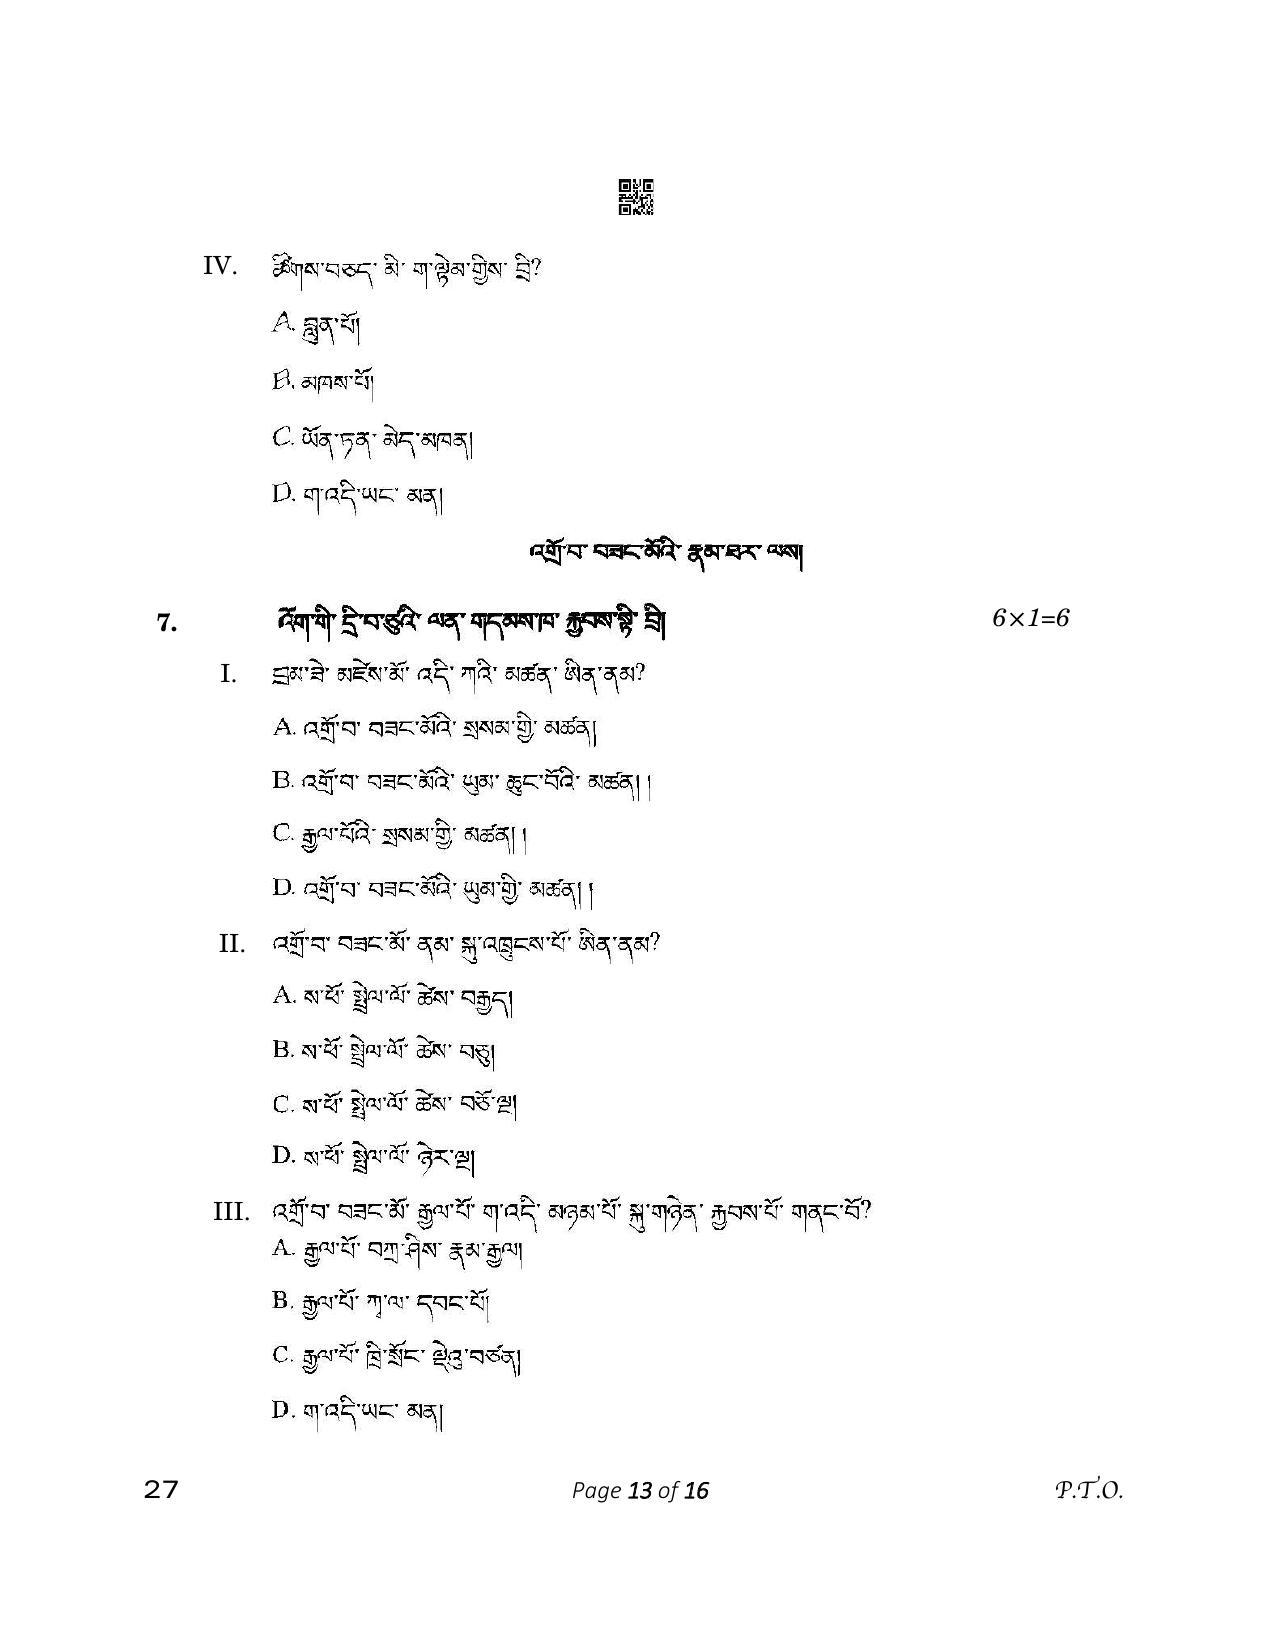 CBSE Class 12 27_Bhutia 2023 2023 Question Paper - Page 13